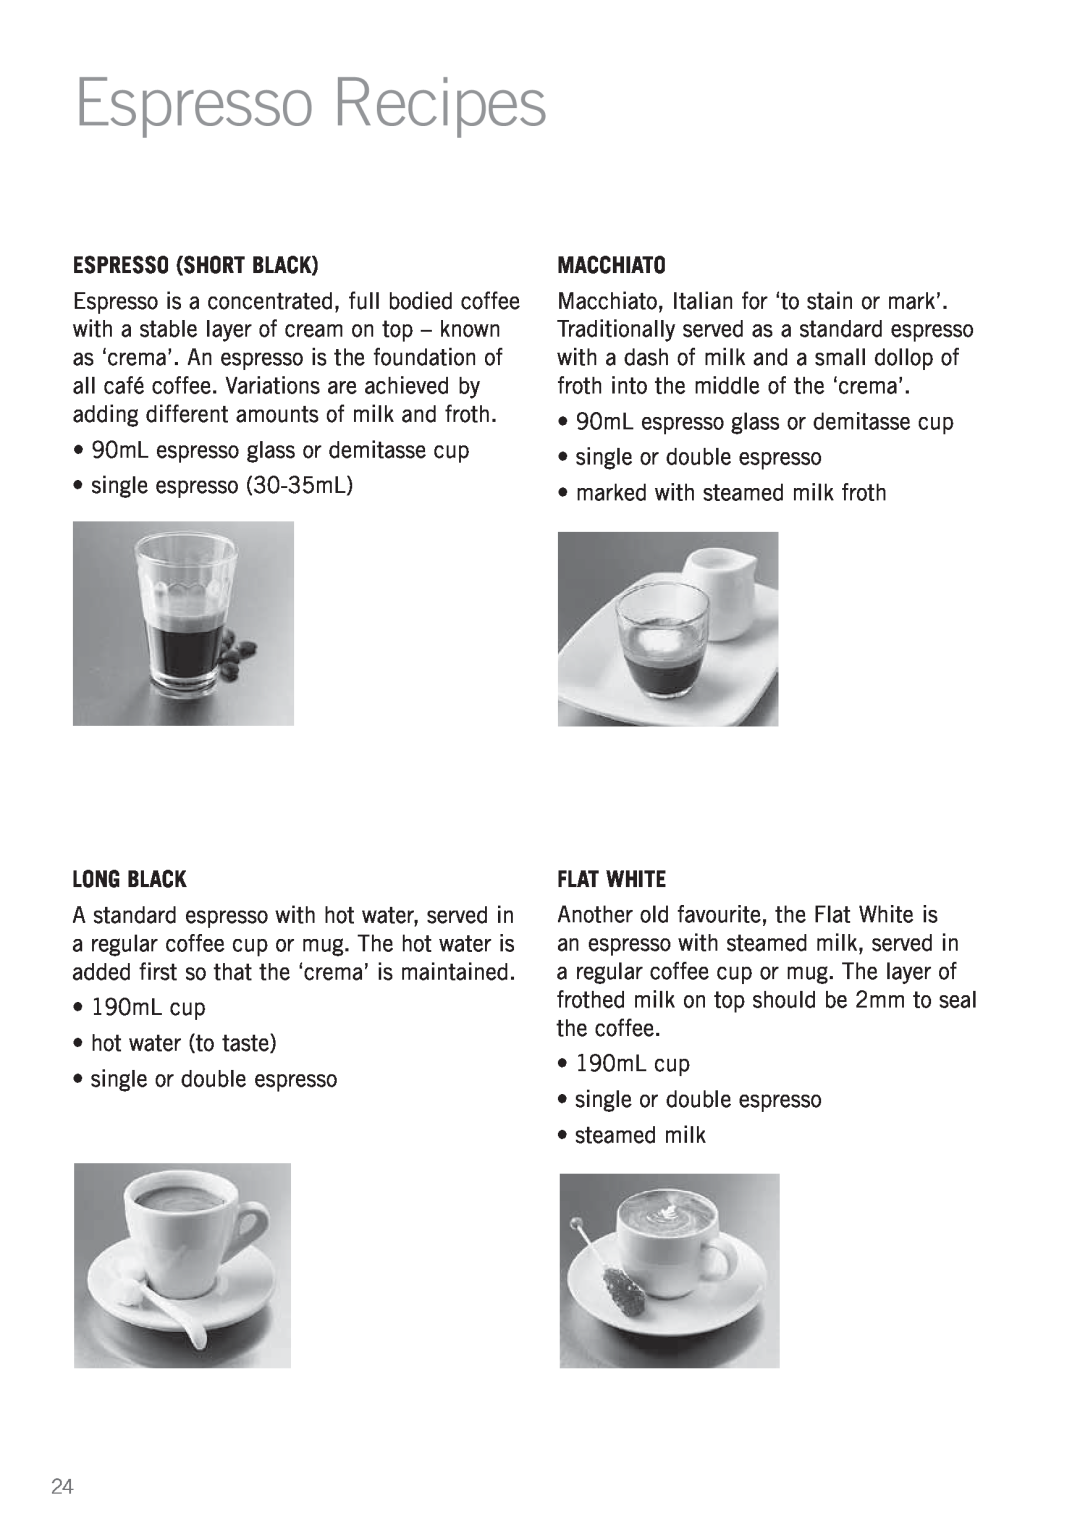 Sunbeam EM6200 manual Espresso Recipes, Espresso Short Black, Long Black, Macchiato, Flat White 